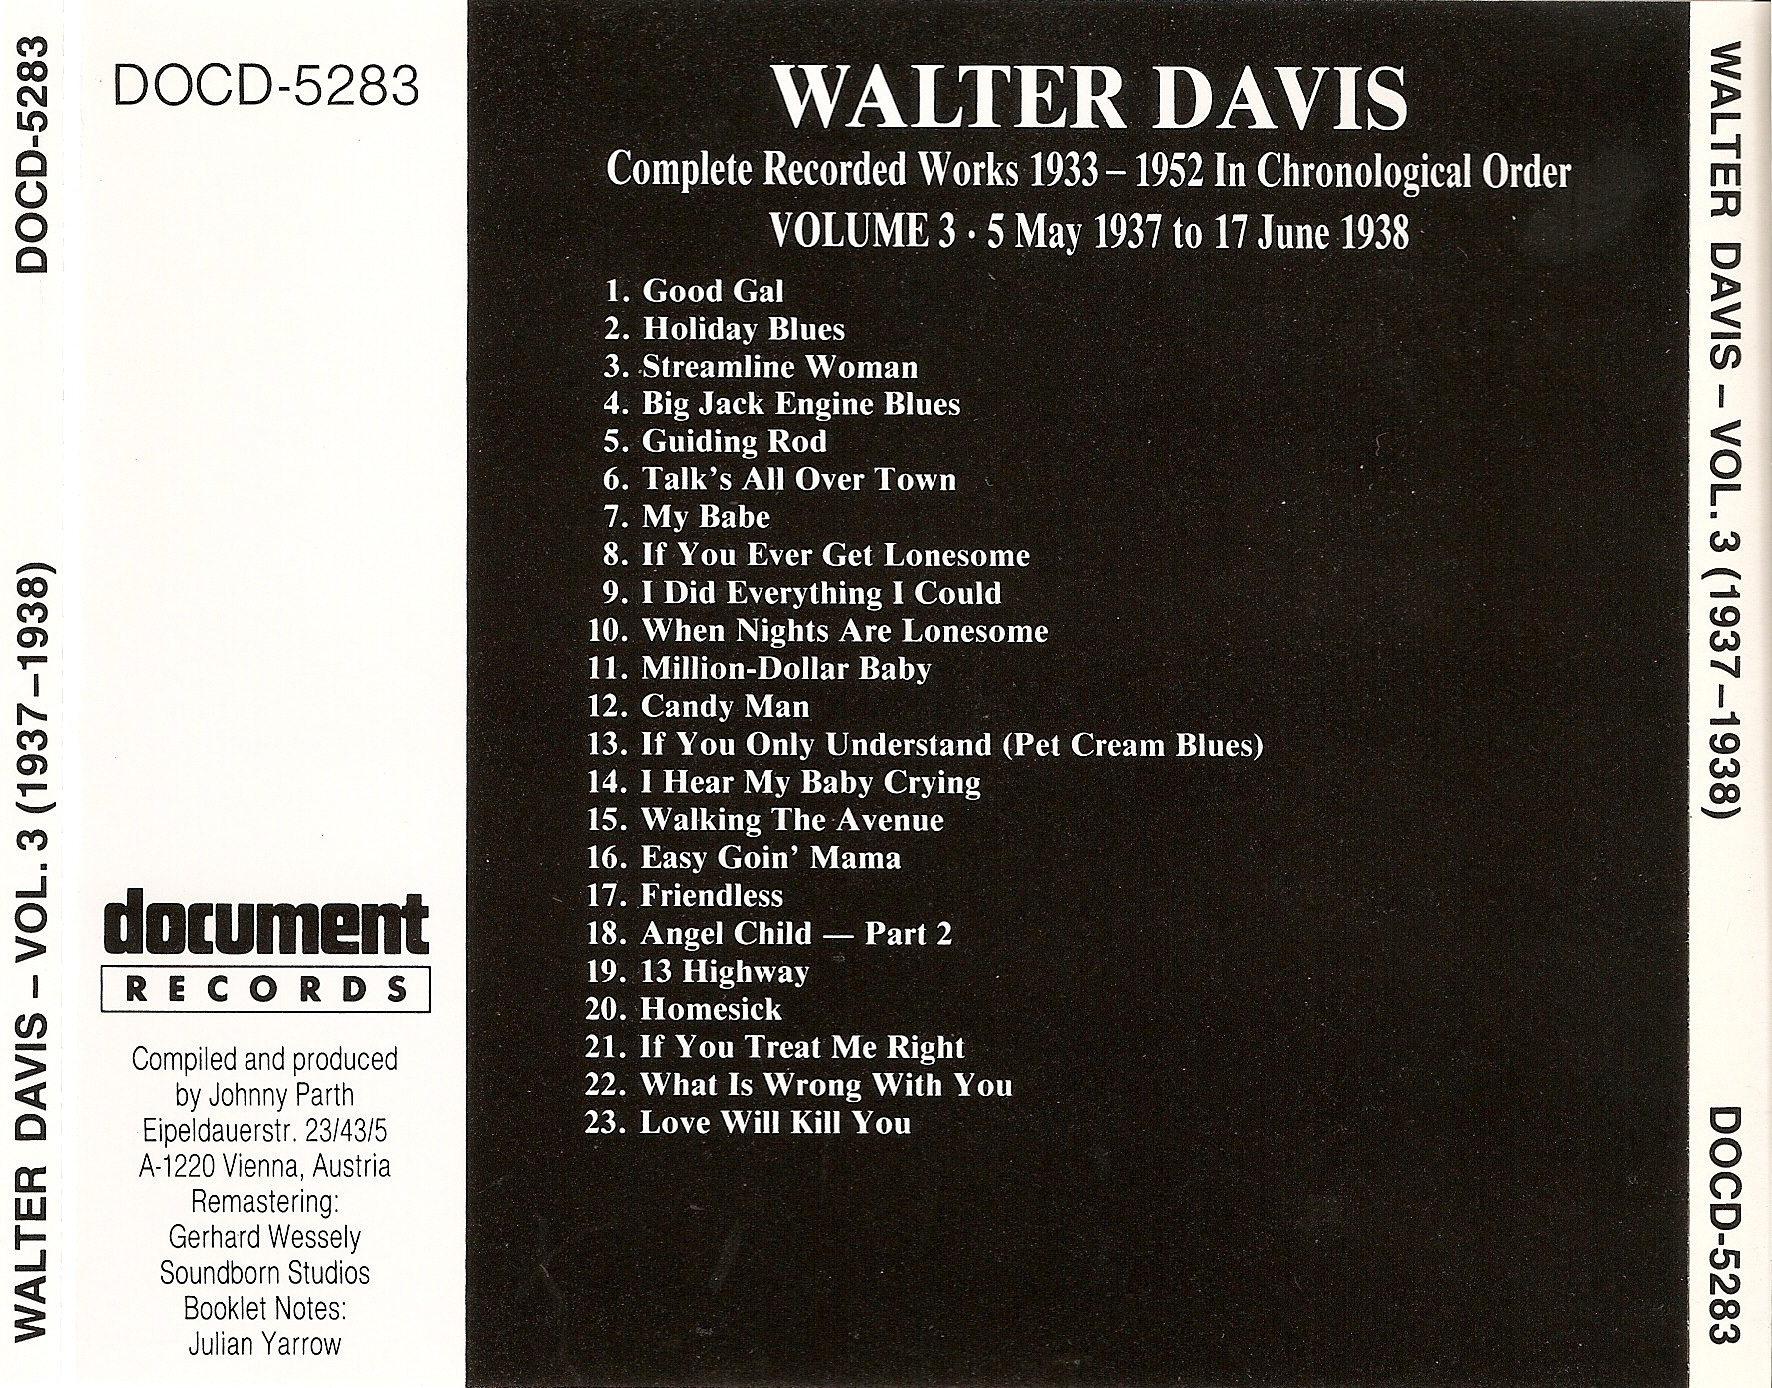 Walter Davis - Vol. 3 (1937-1938) DOCD-5283